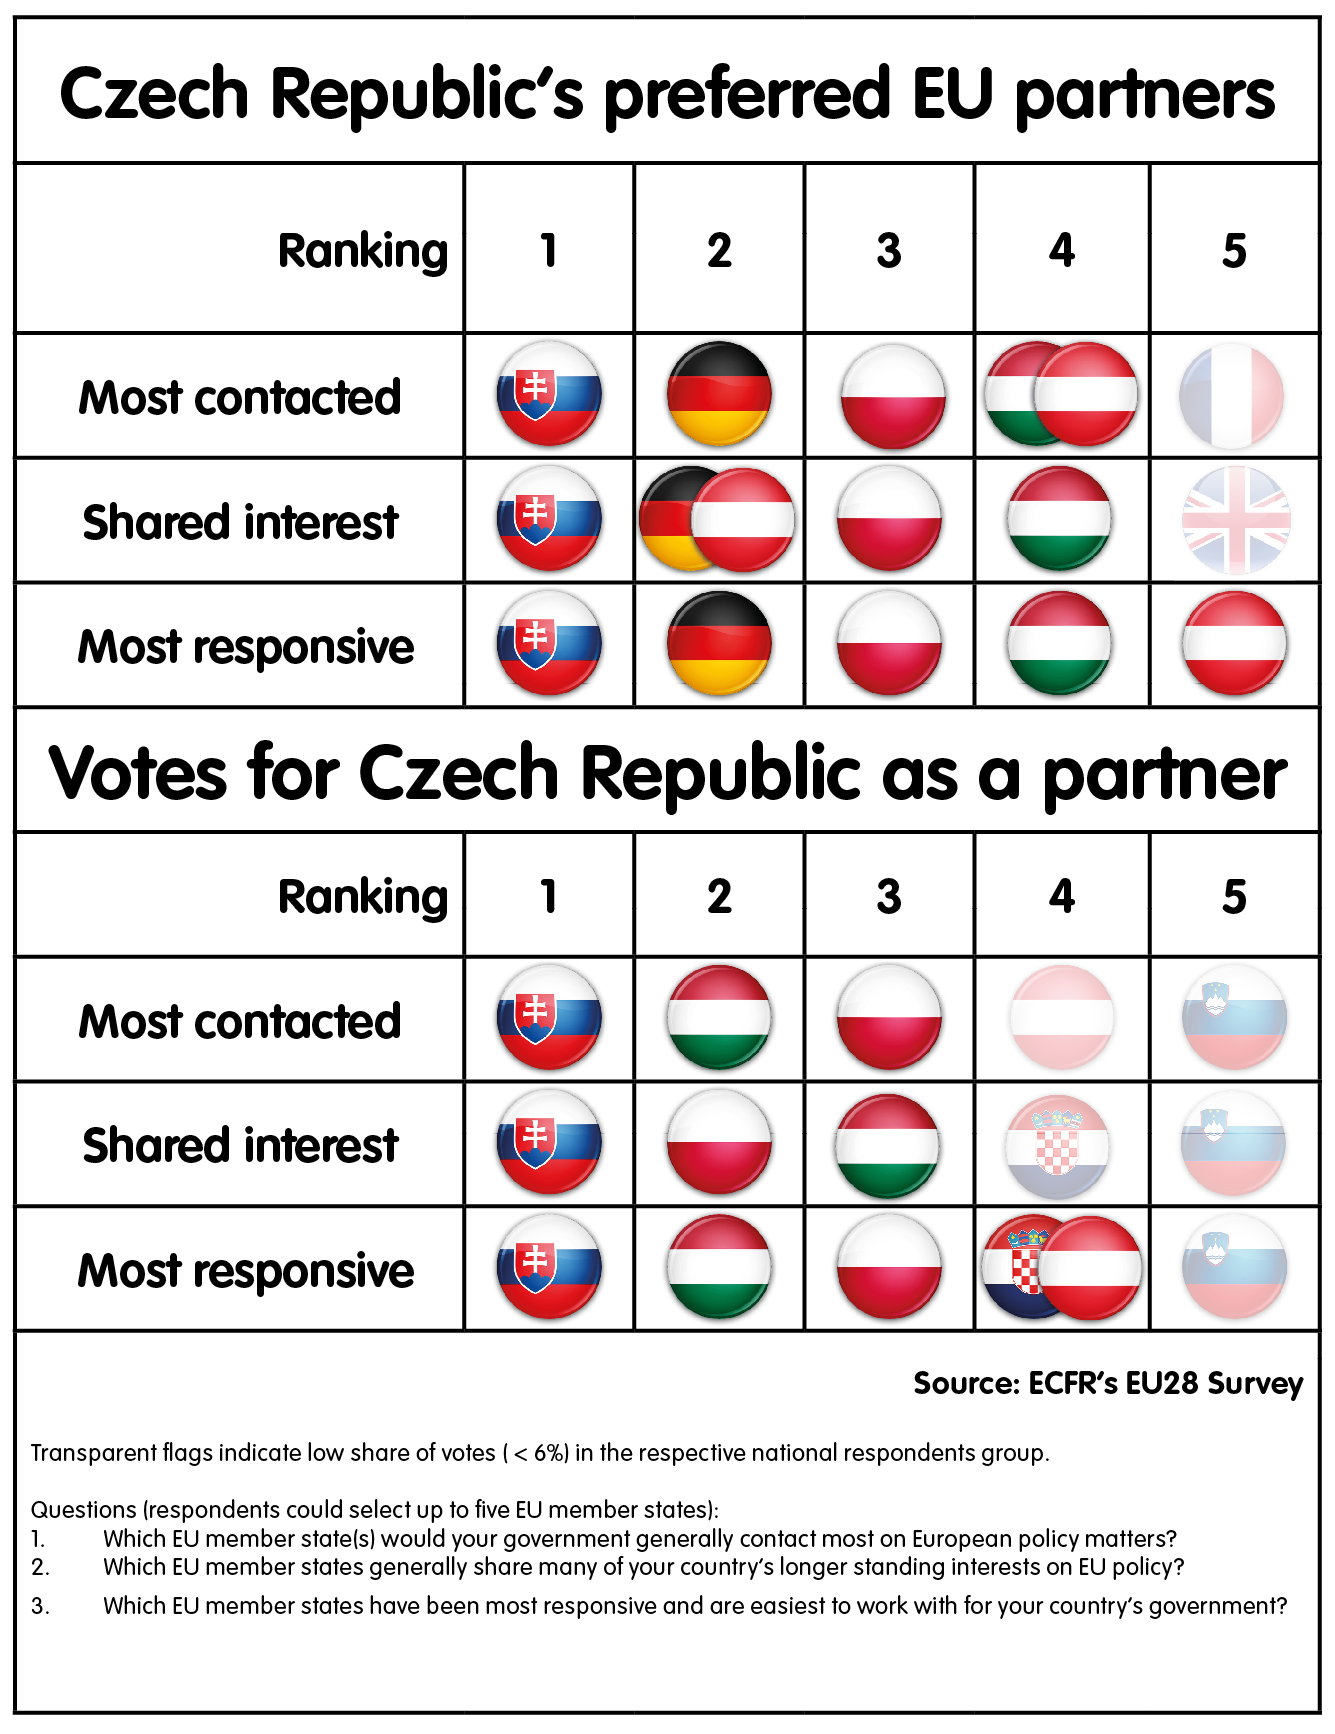 Czech Republic's likeminded partners